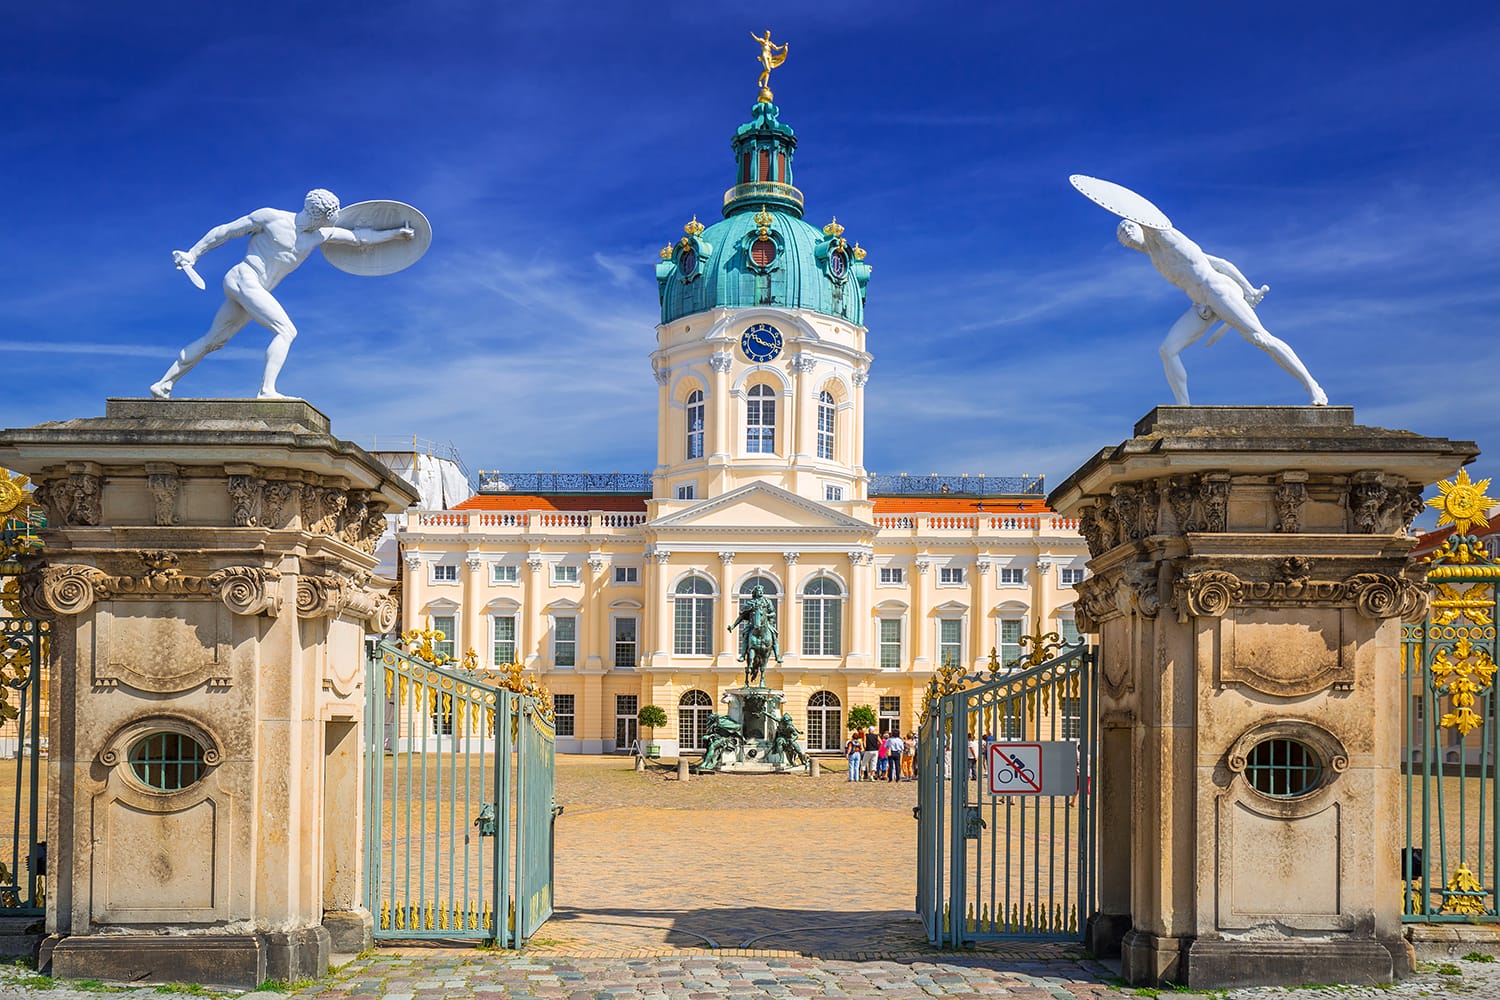 Charlottenburg palace in Berlin, Germany